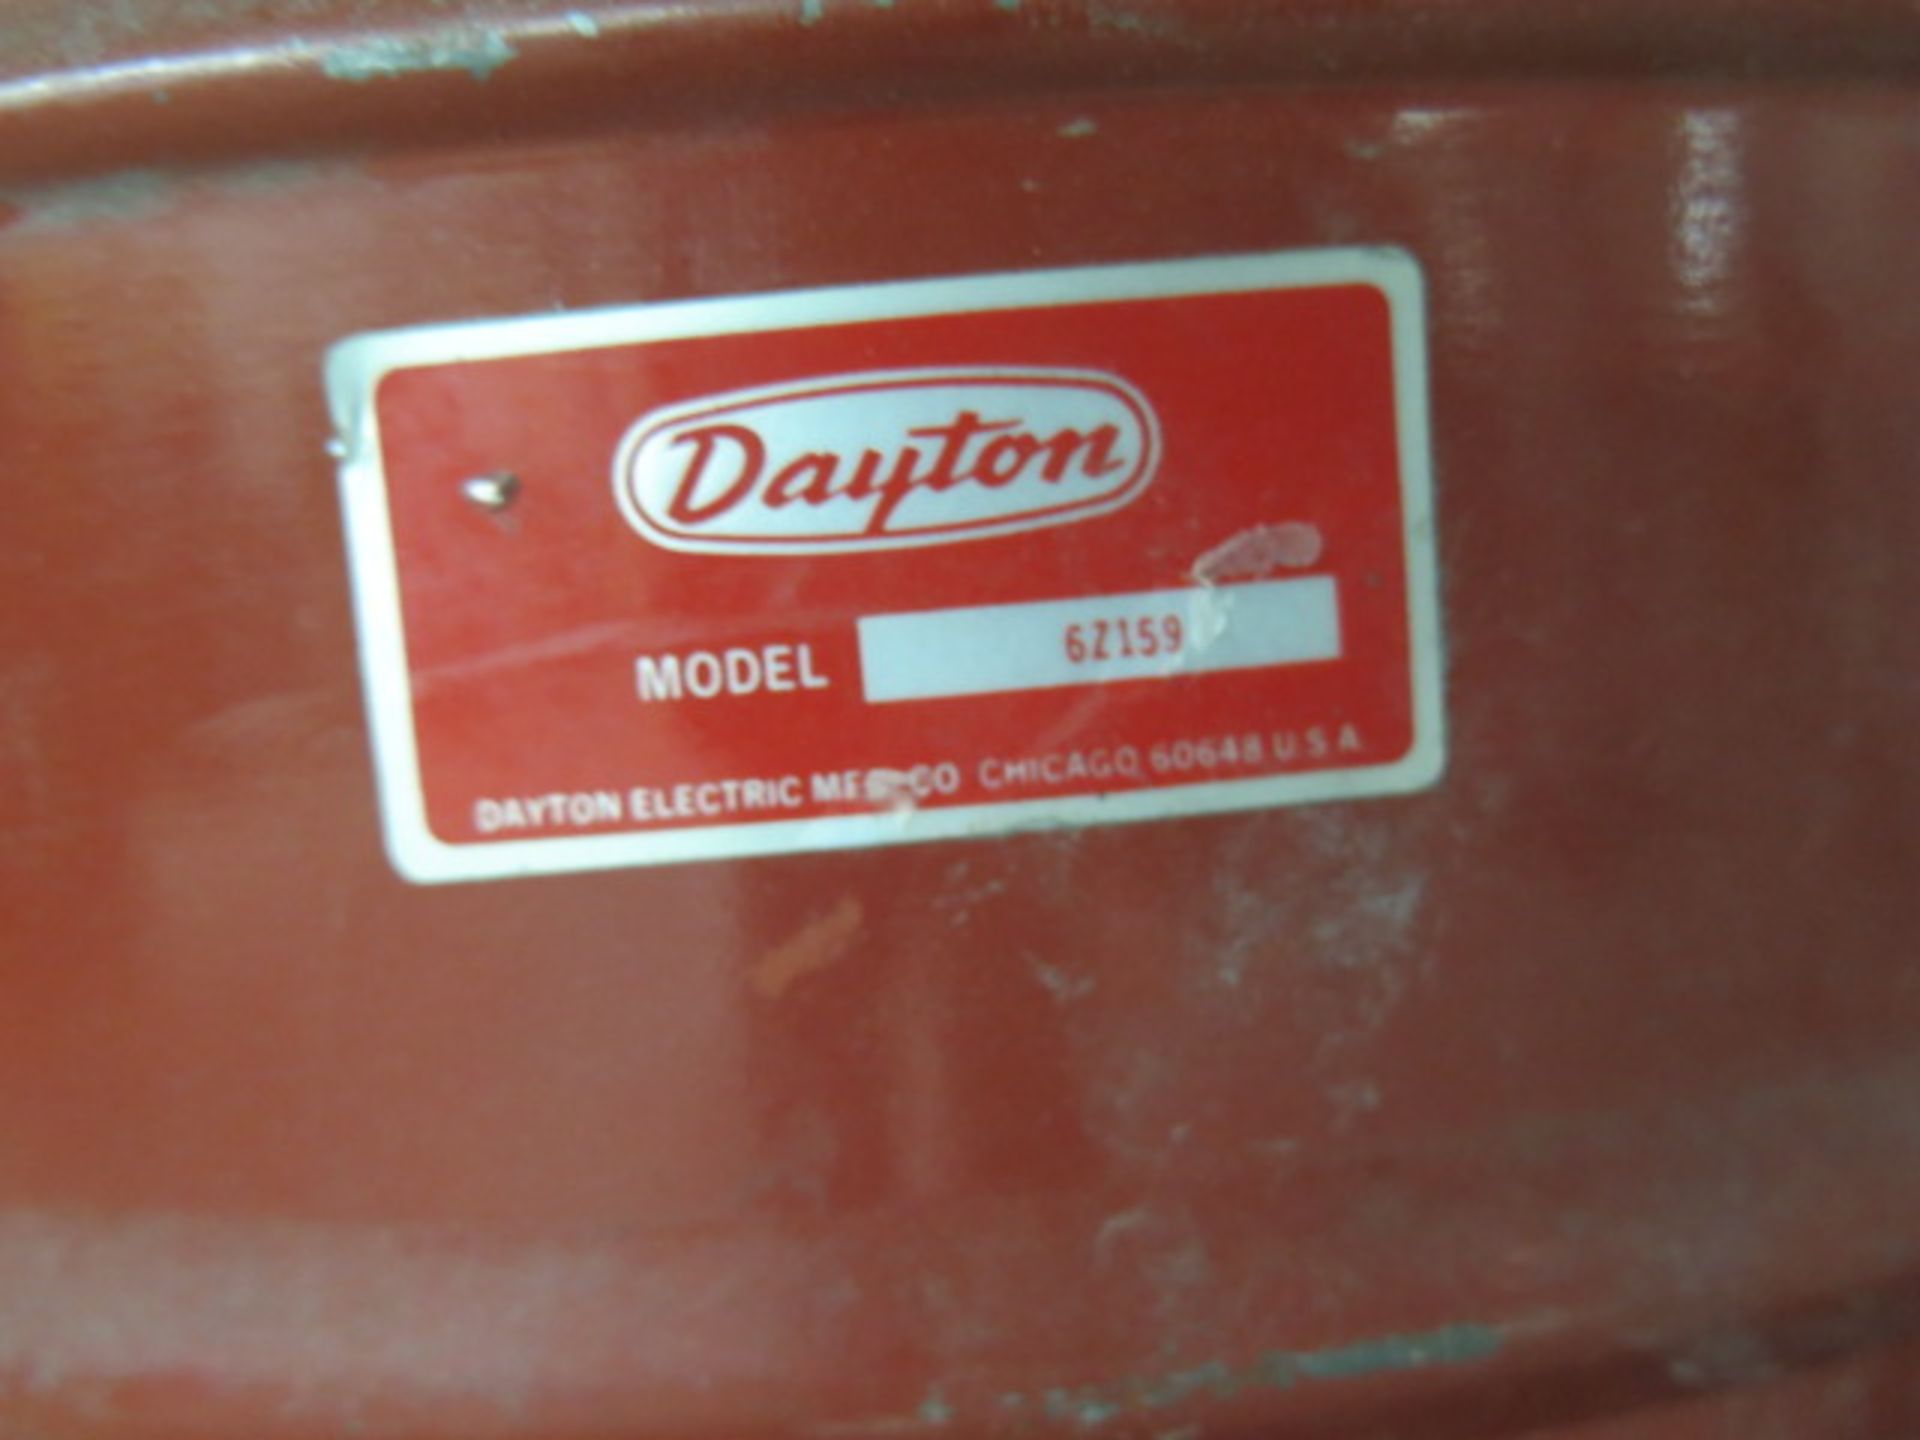 Dayton Industrial Shop Vac - Image 3 of 5